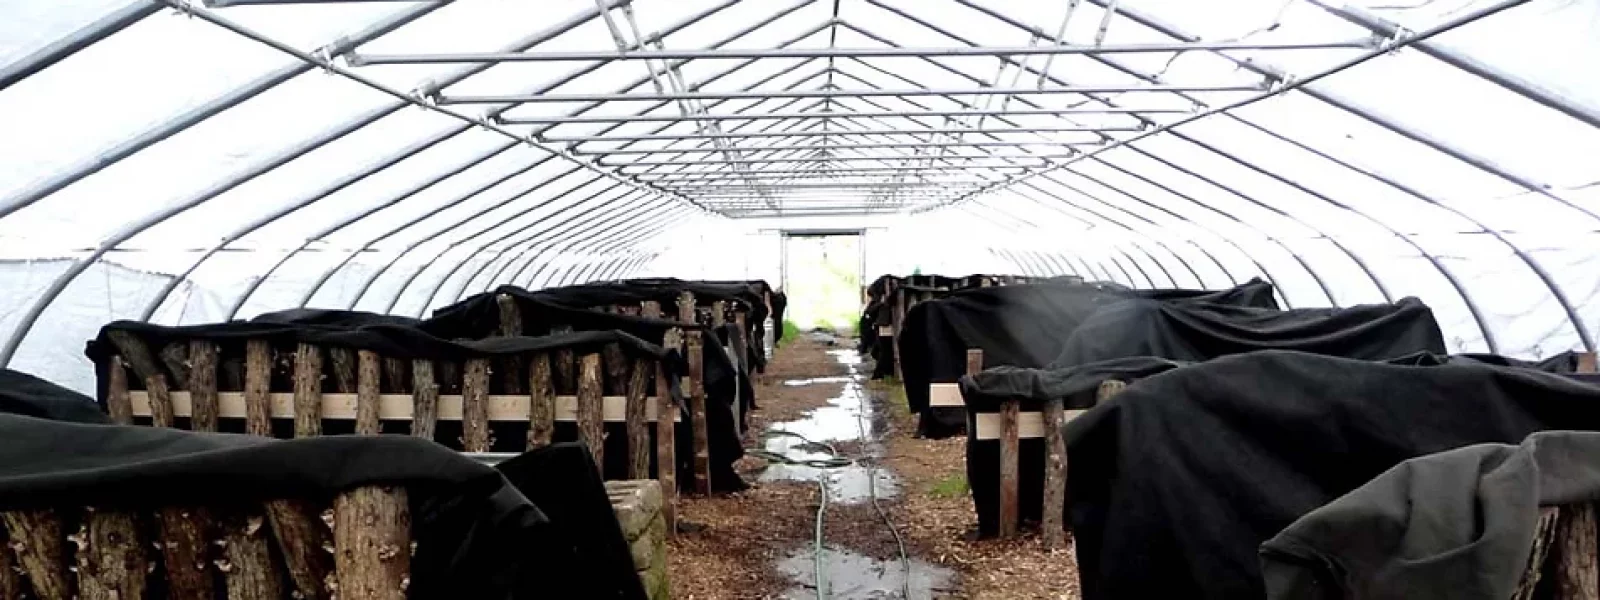 A greenhouse full of logs growing mushrooms